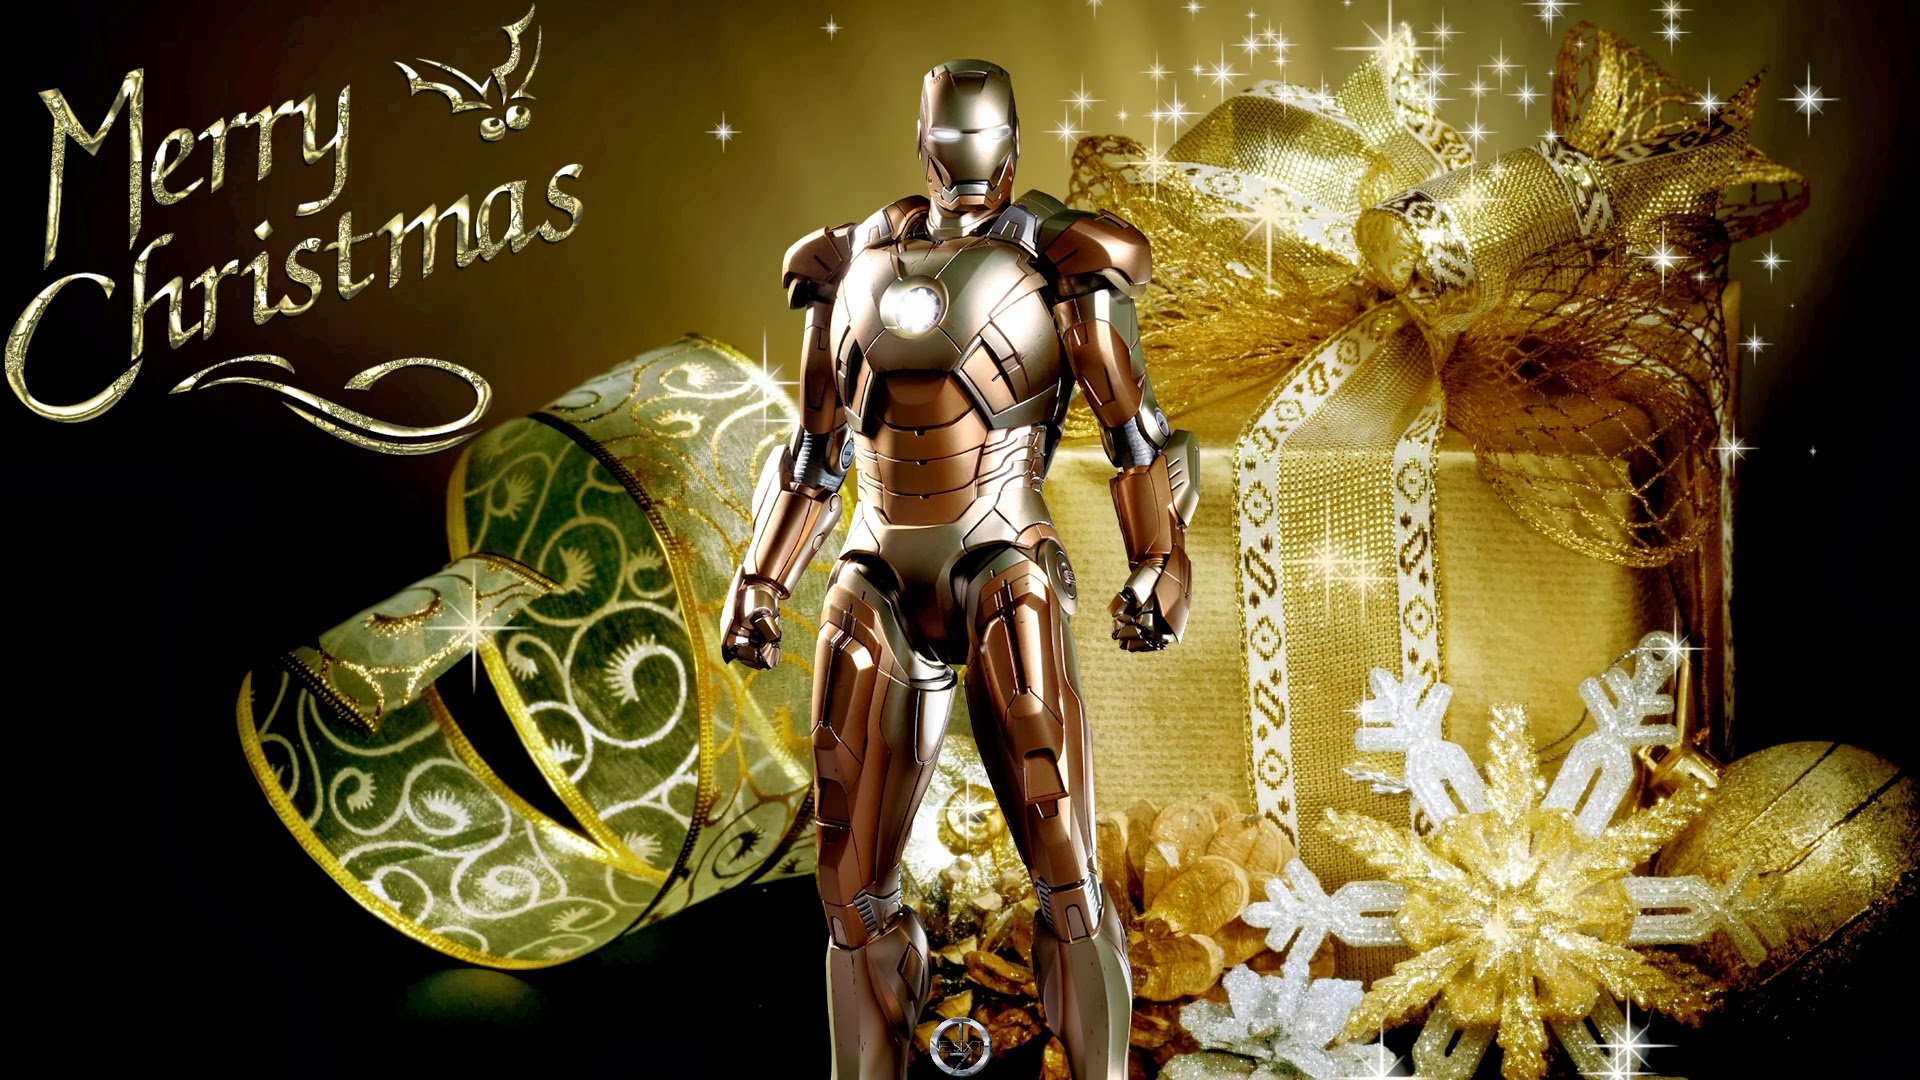 Merry Christmas wishes iron man